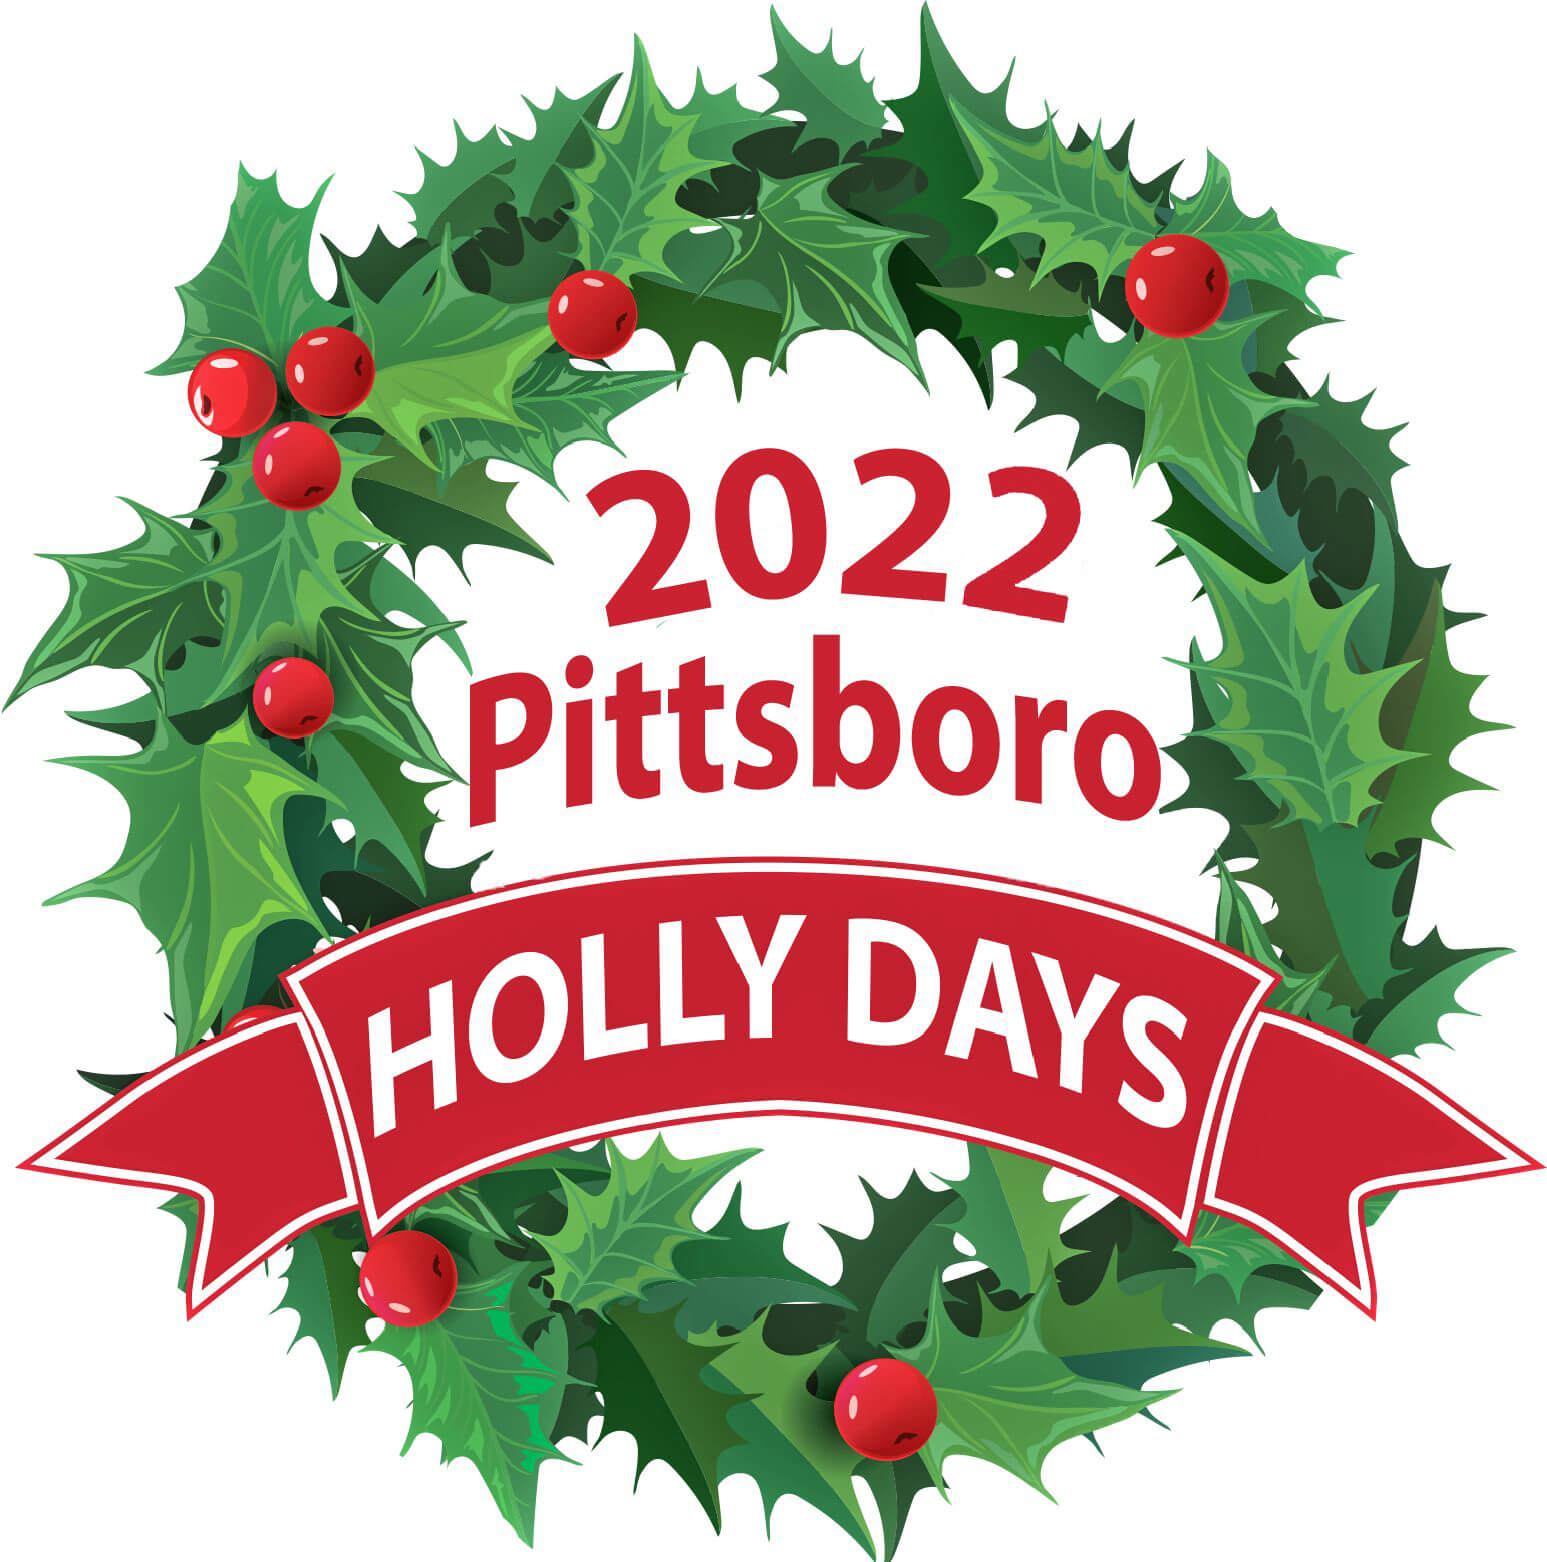 Holly Days 2022 Pittsboro NC